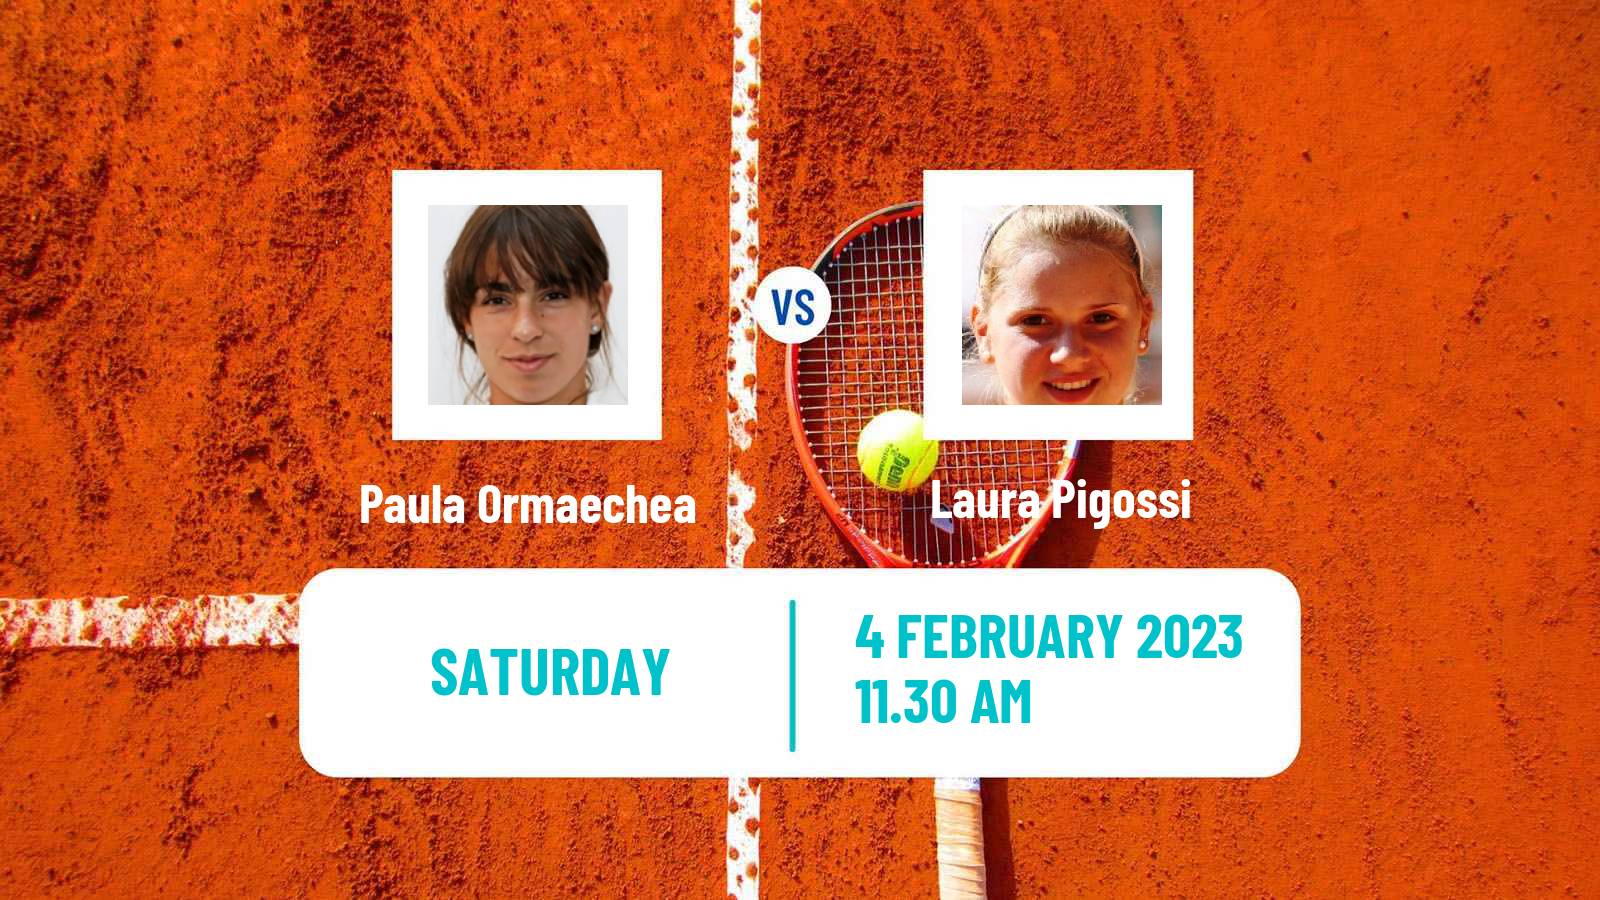 Tennis ATP Challenger Paula Ormaechea - Laura Pigossi